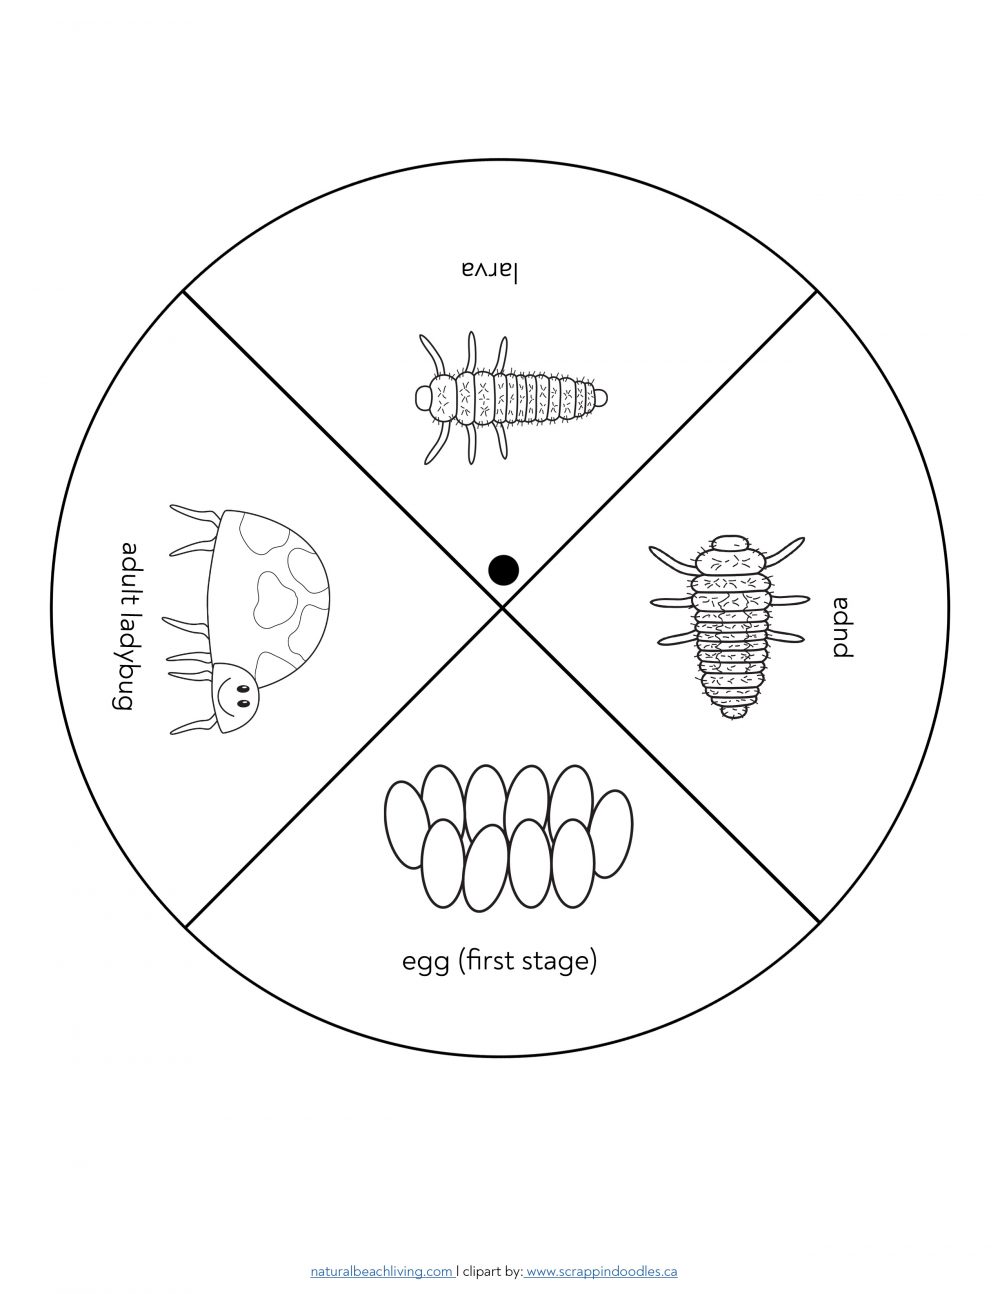 grab-these-free-printable-ladybug-life-cycle-worksheets-to-explore